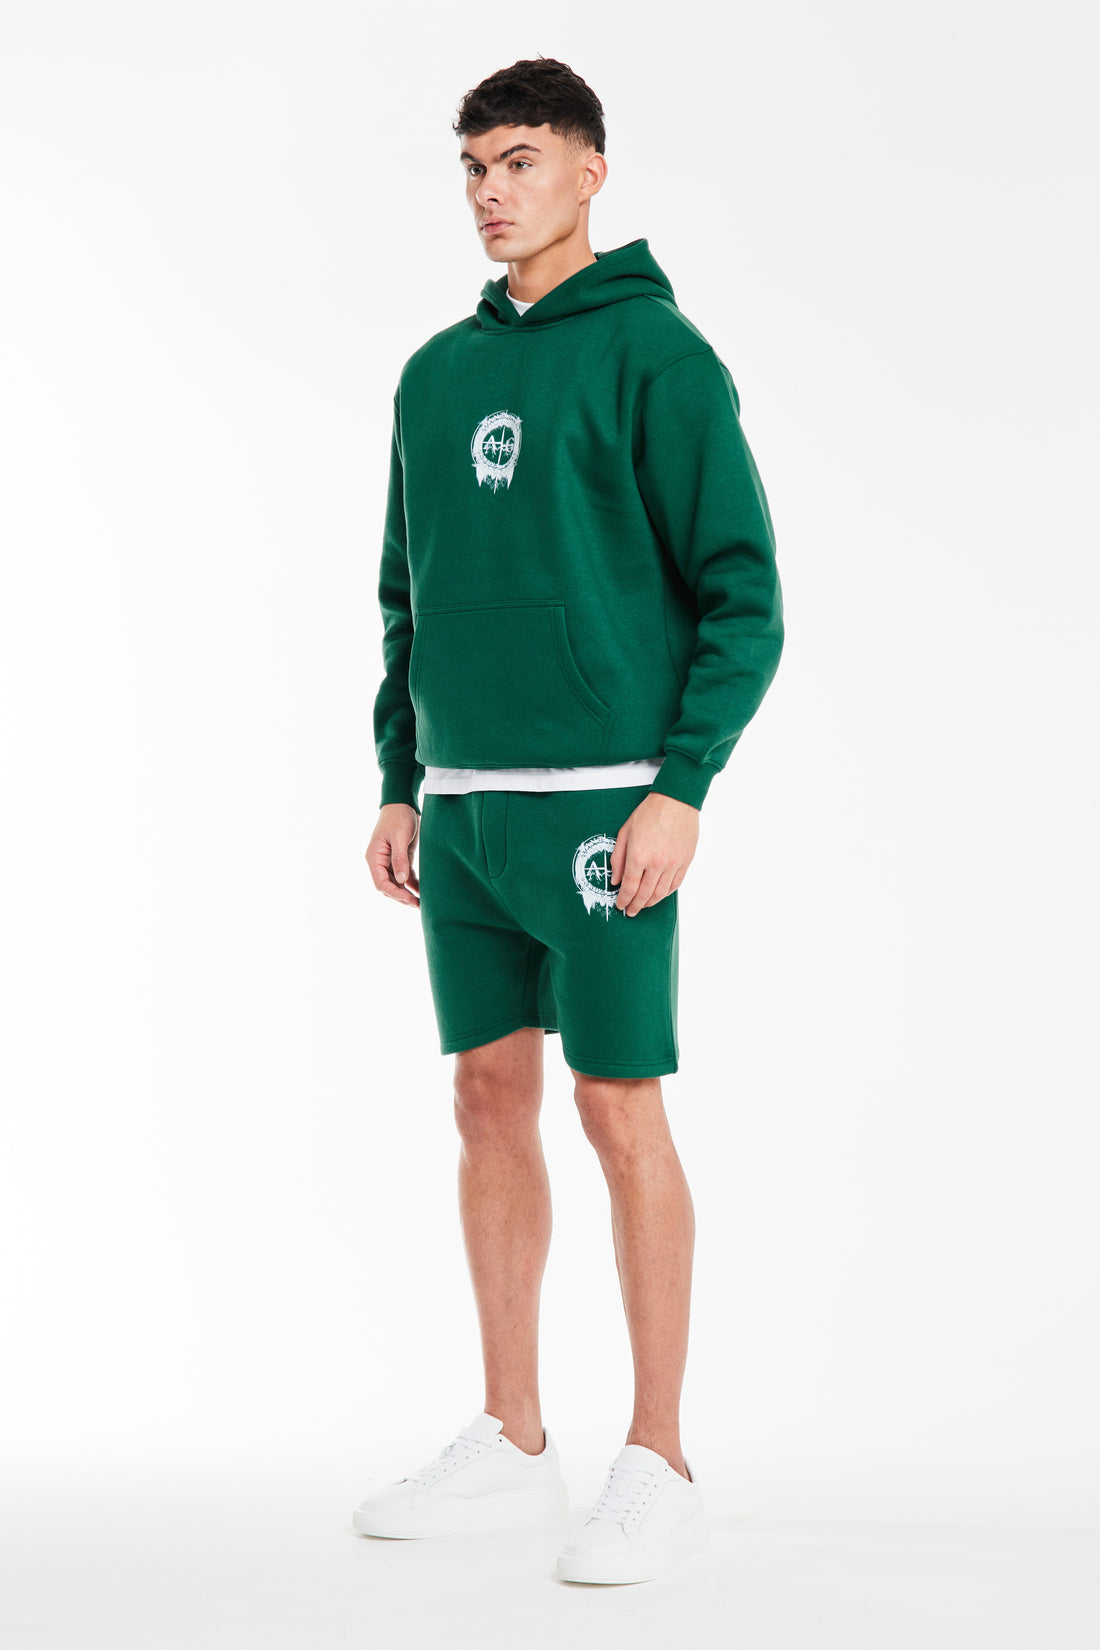 men's twin short sets in emerald green